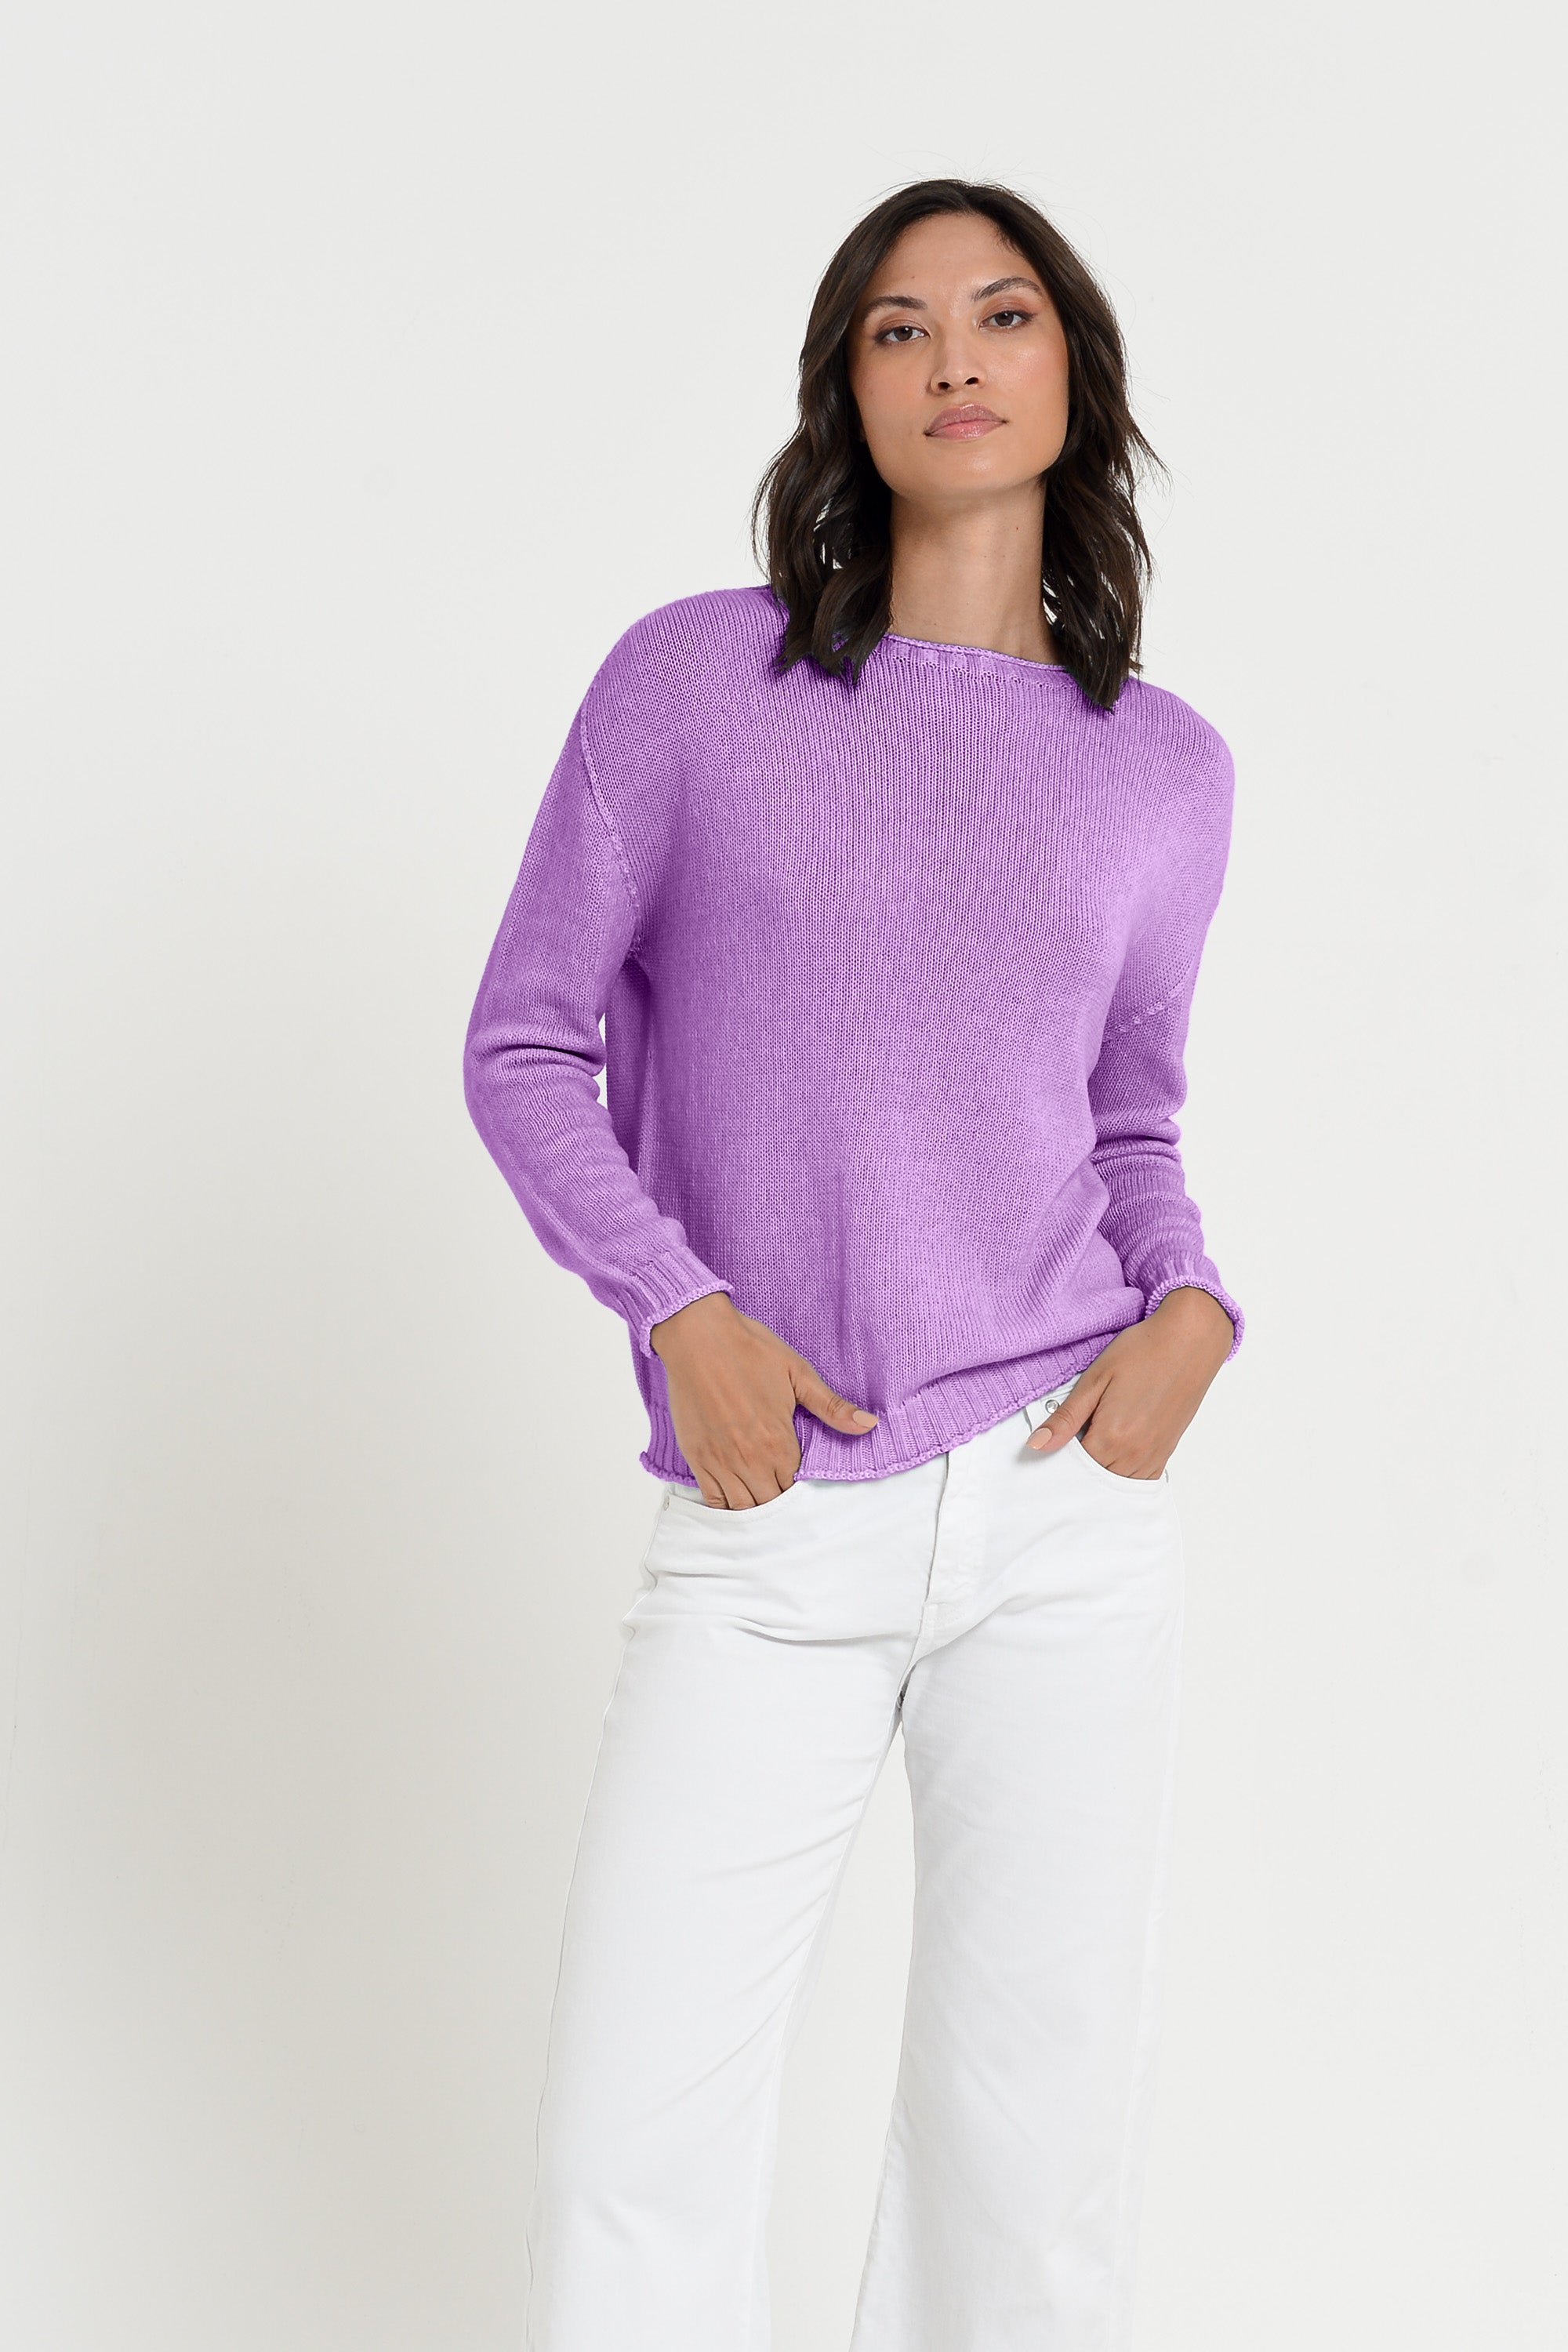 Vaze Knit - Women's Cotton Knit Sweater - Morado